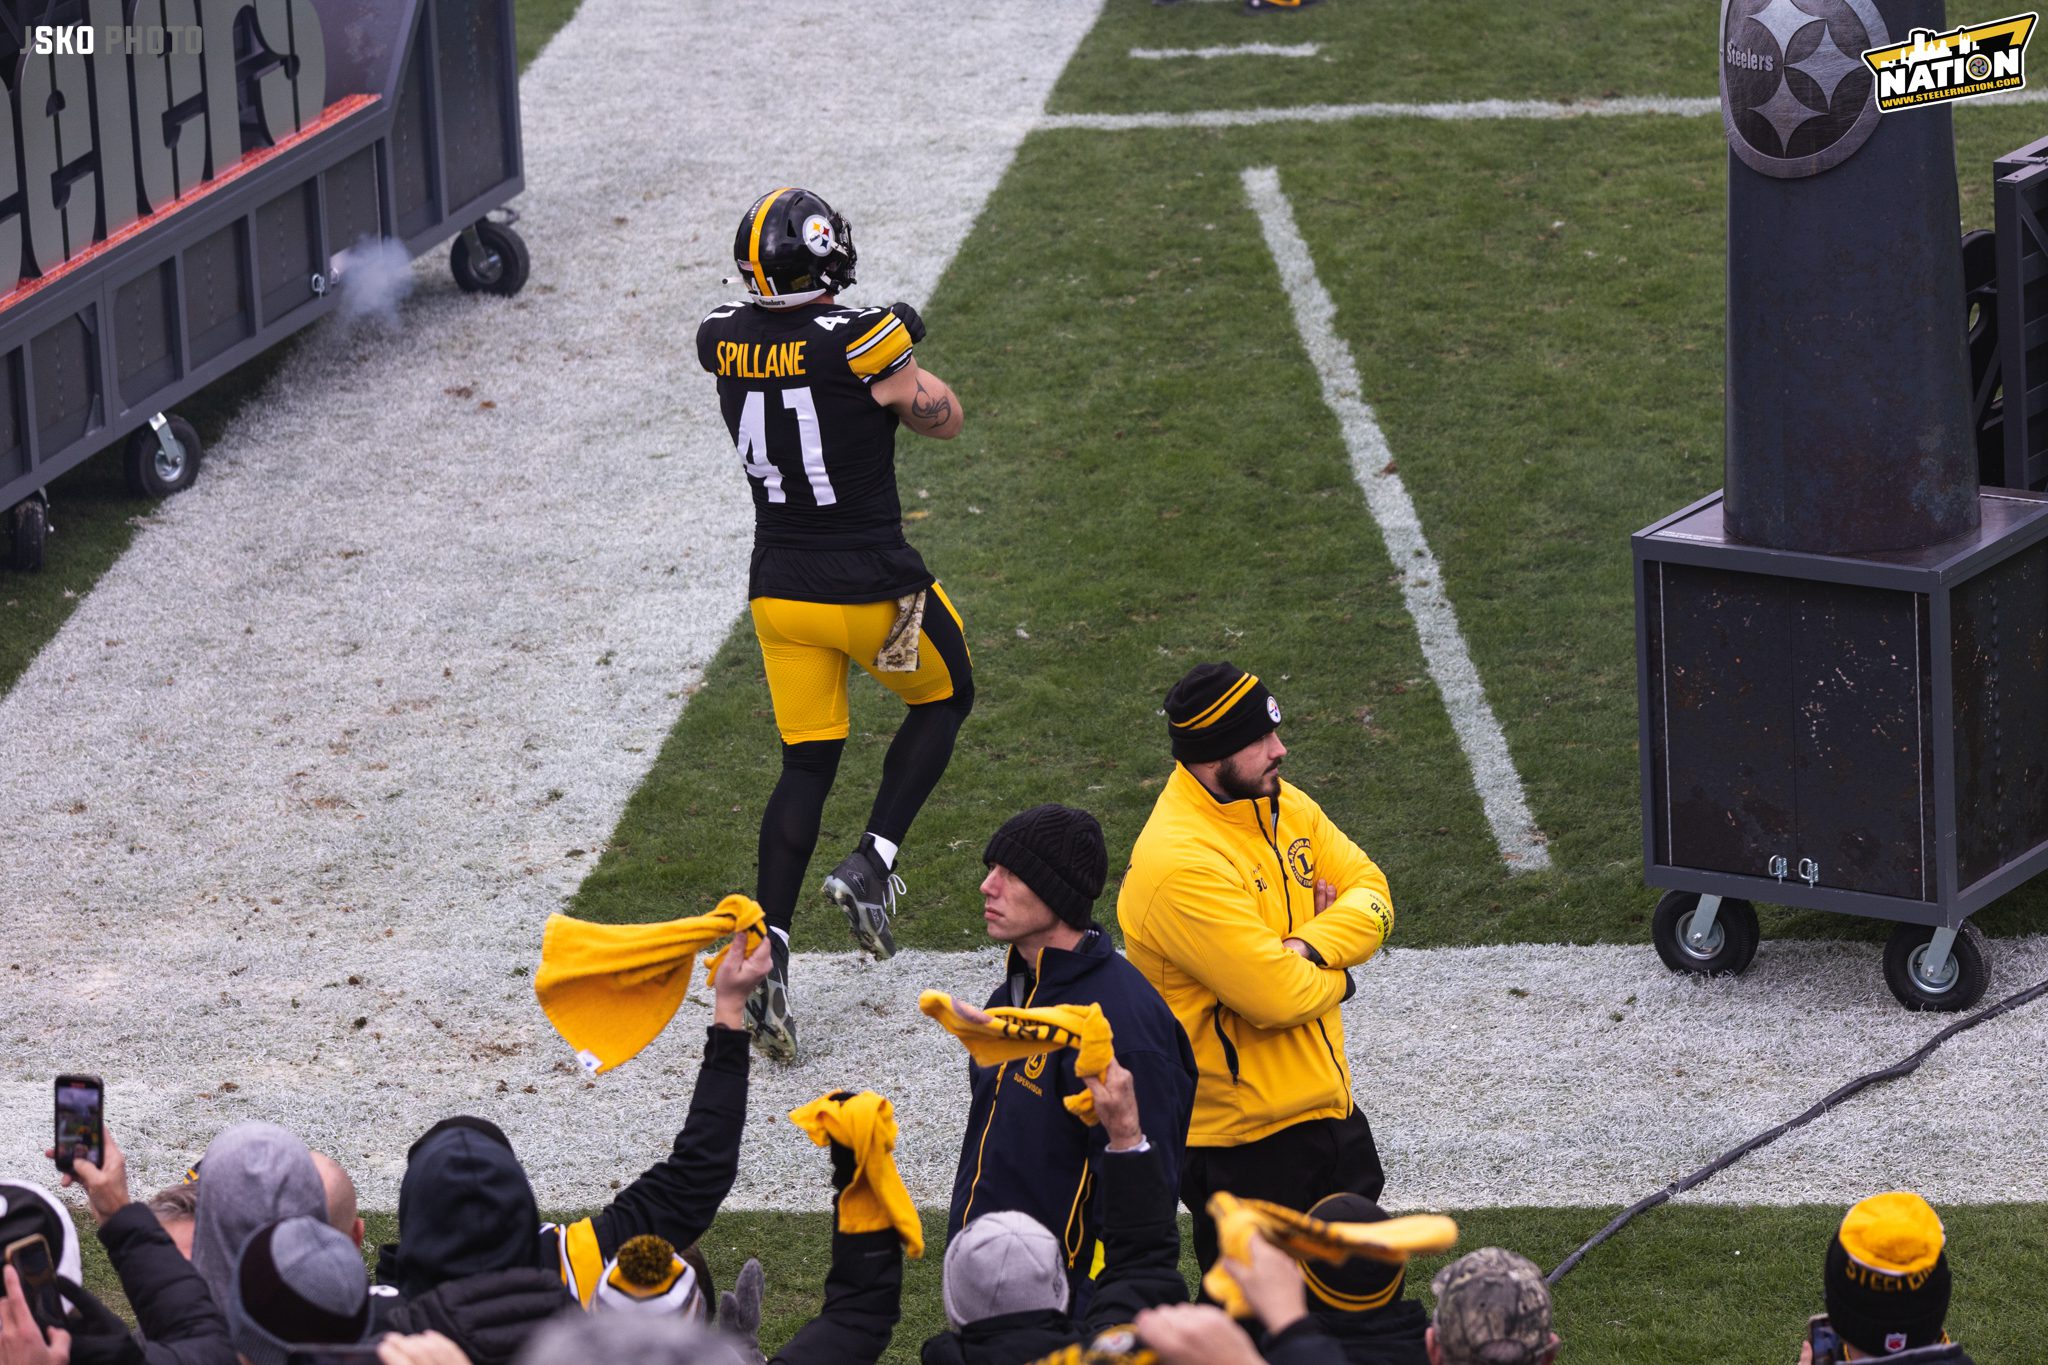 Spillane's shot: Steelers LB primed to replace injured Bush